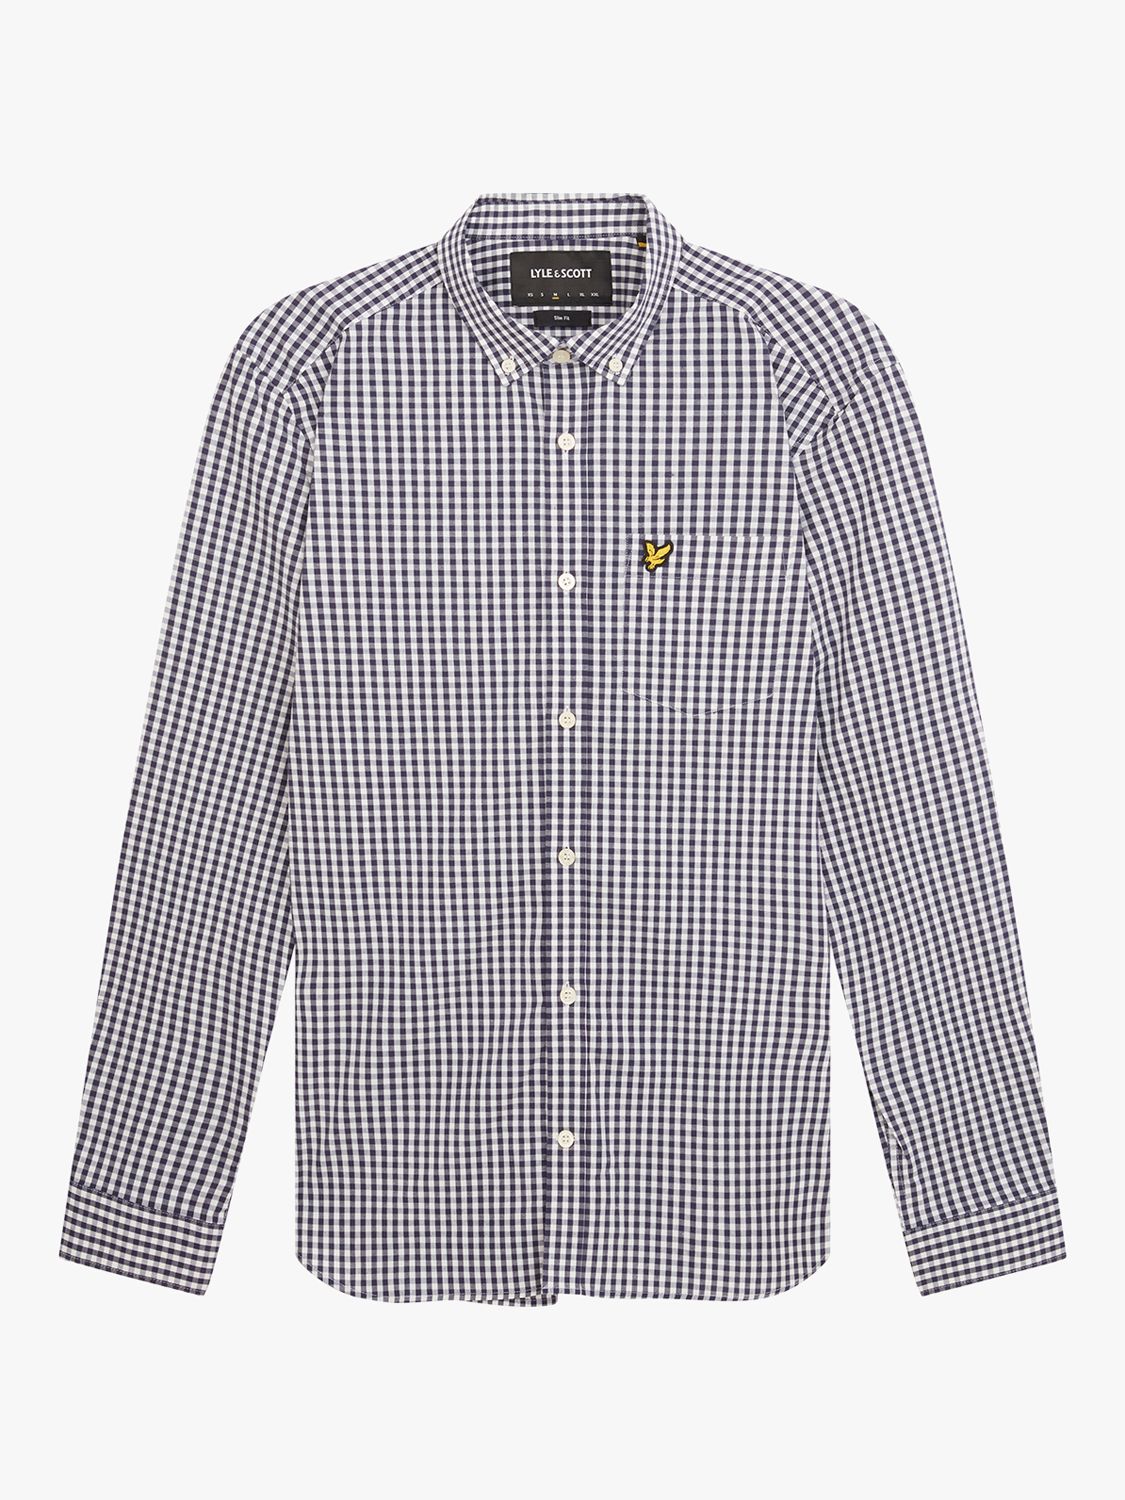 Lyle & Scott Slim Fit Long Sleeve Gingham Shirt, Navy/White, XS